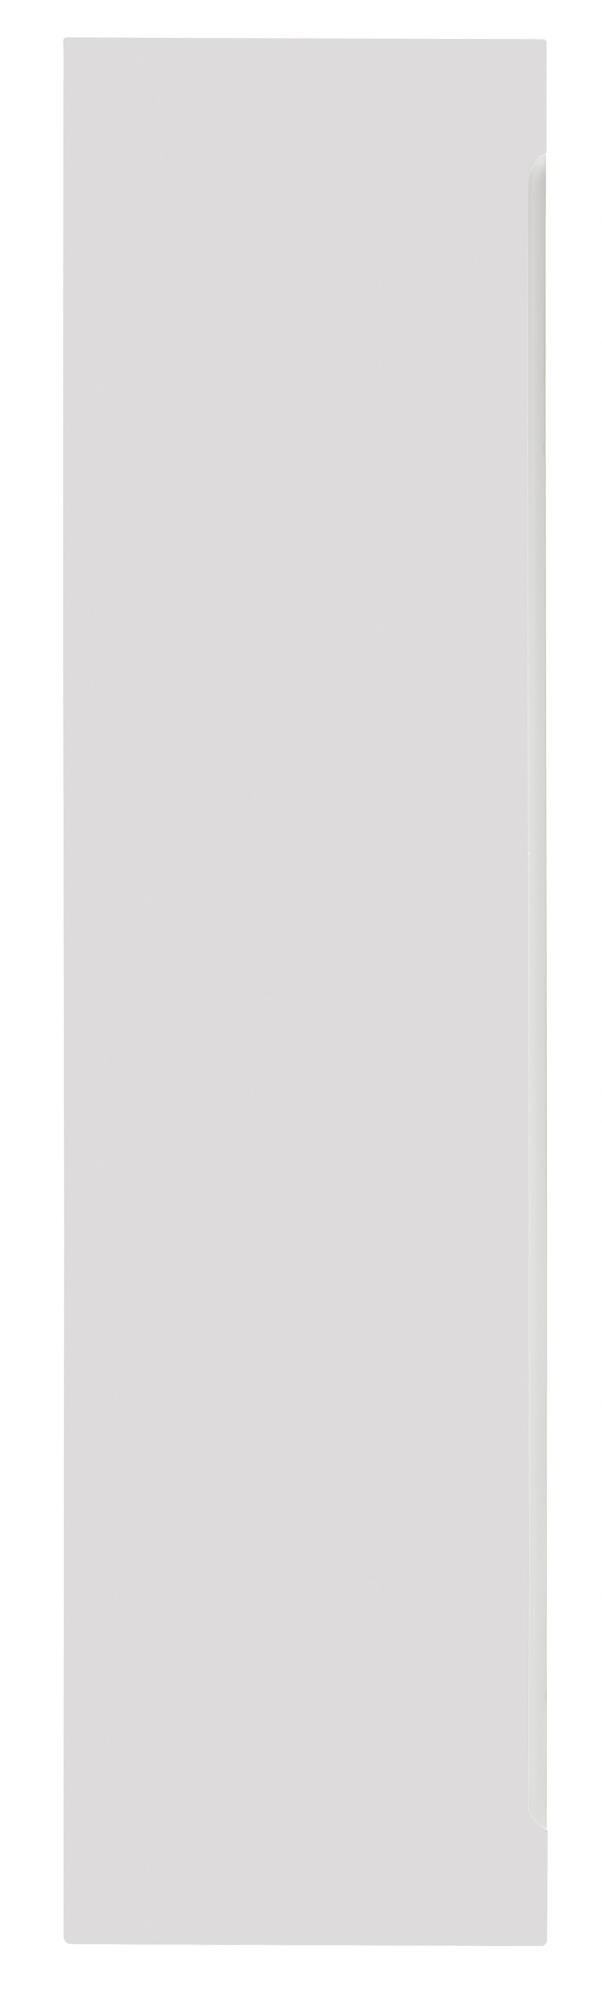 Puerta abatible para armario osaka blanco 60x240x1,9 cm